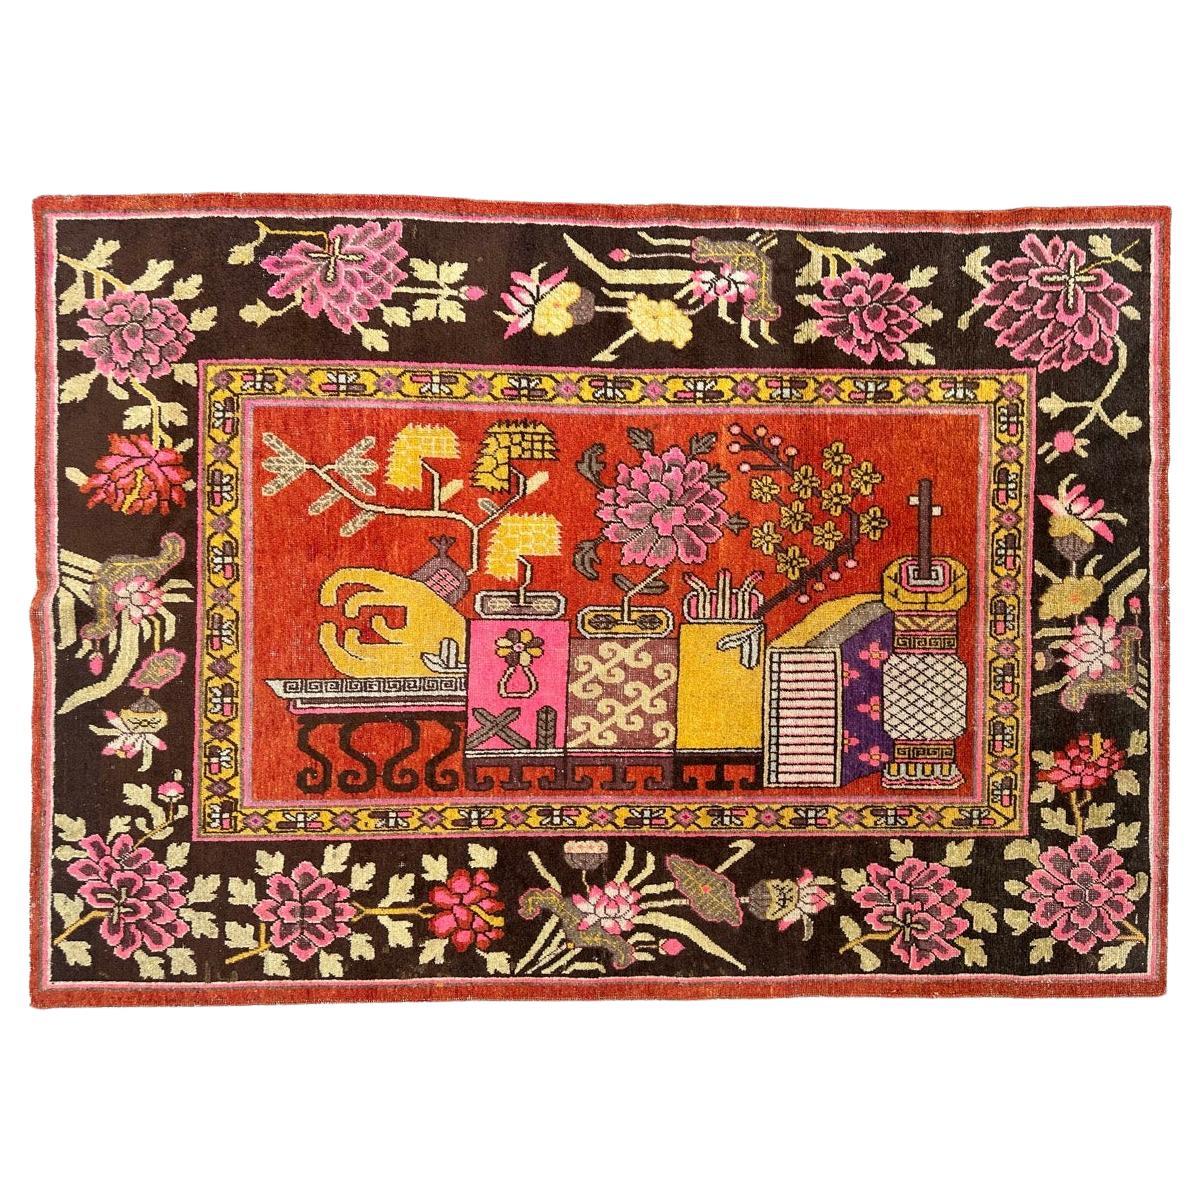 Bobyrug’s Nice antique Chinese Khotan rug  For Sale